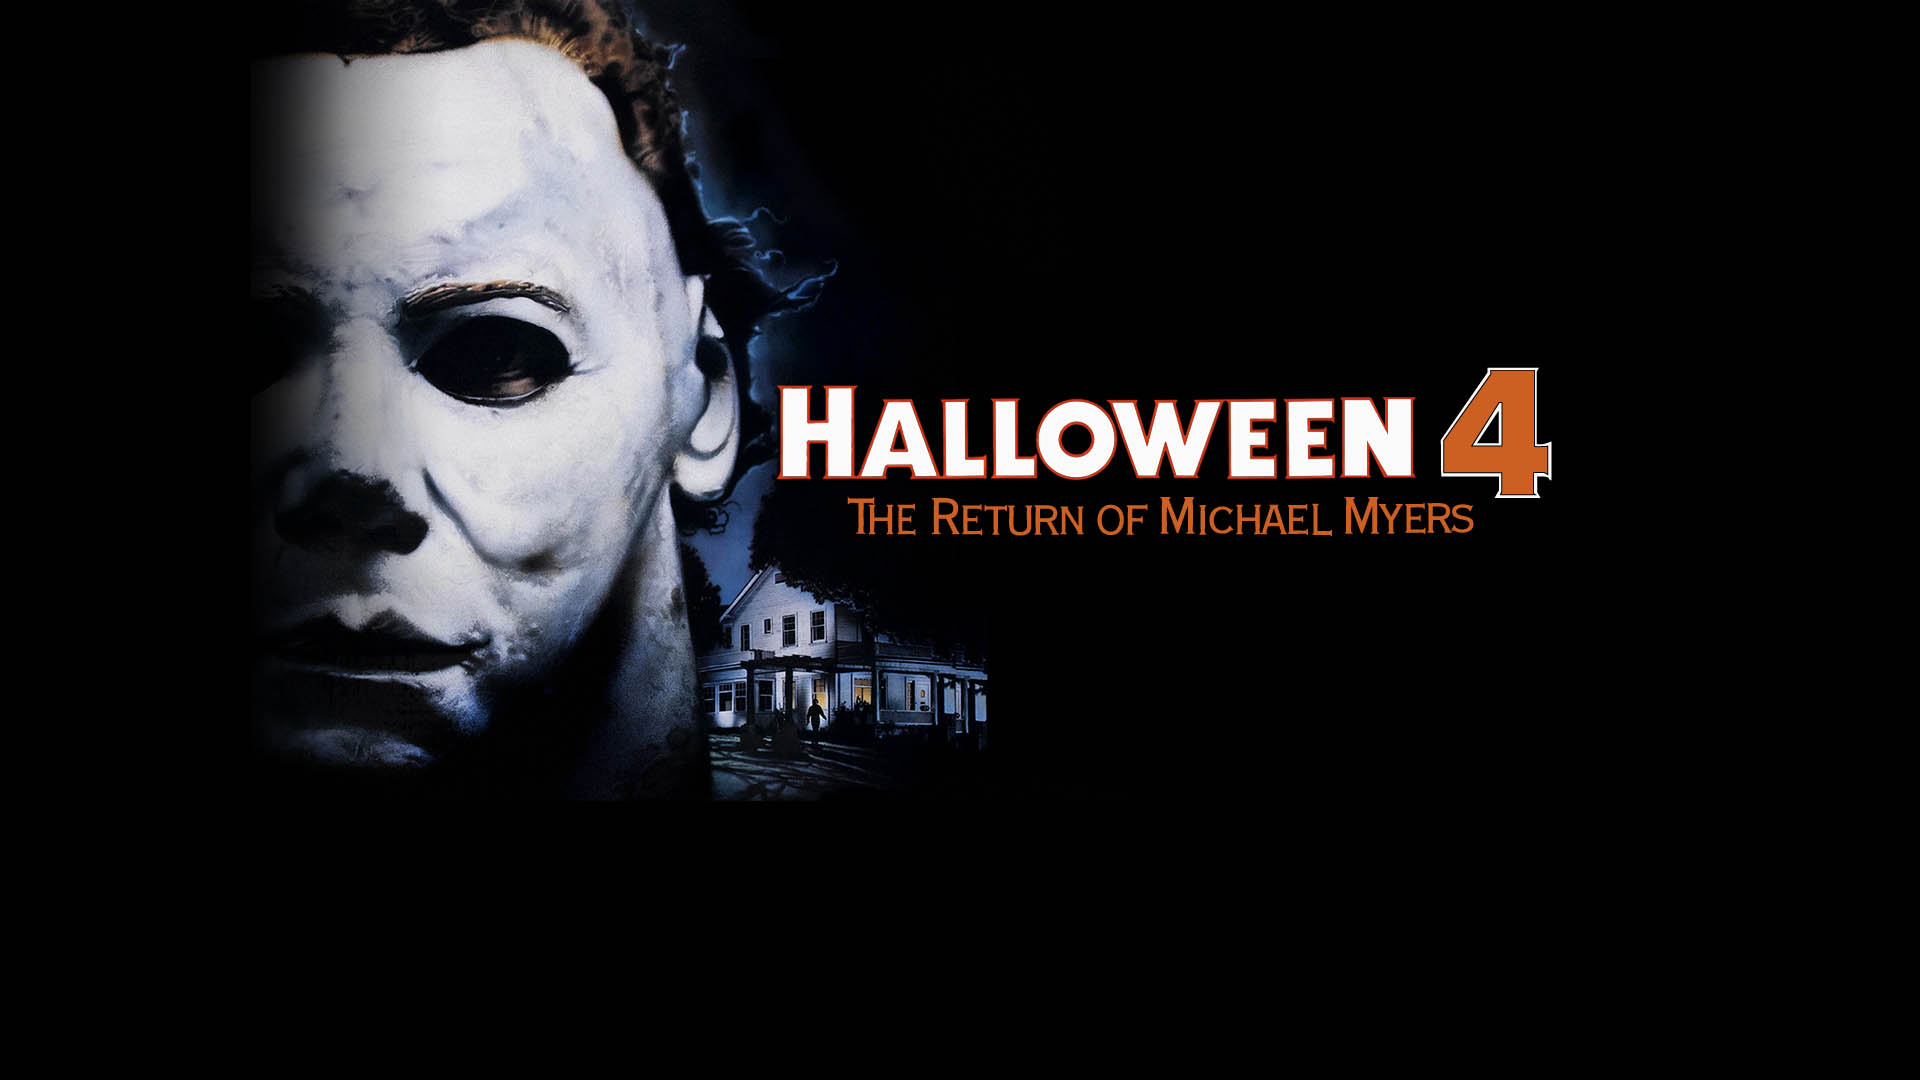 Watch Halloween 4 Online | Stream Full Movies